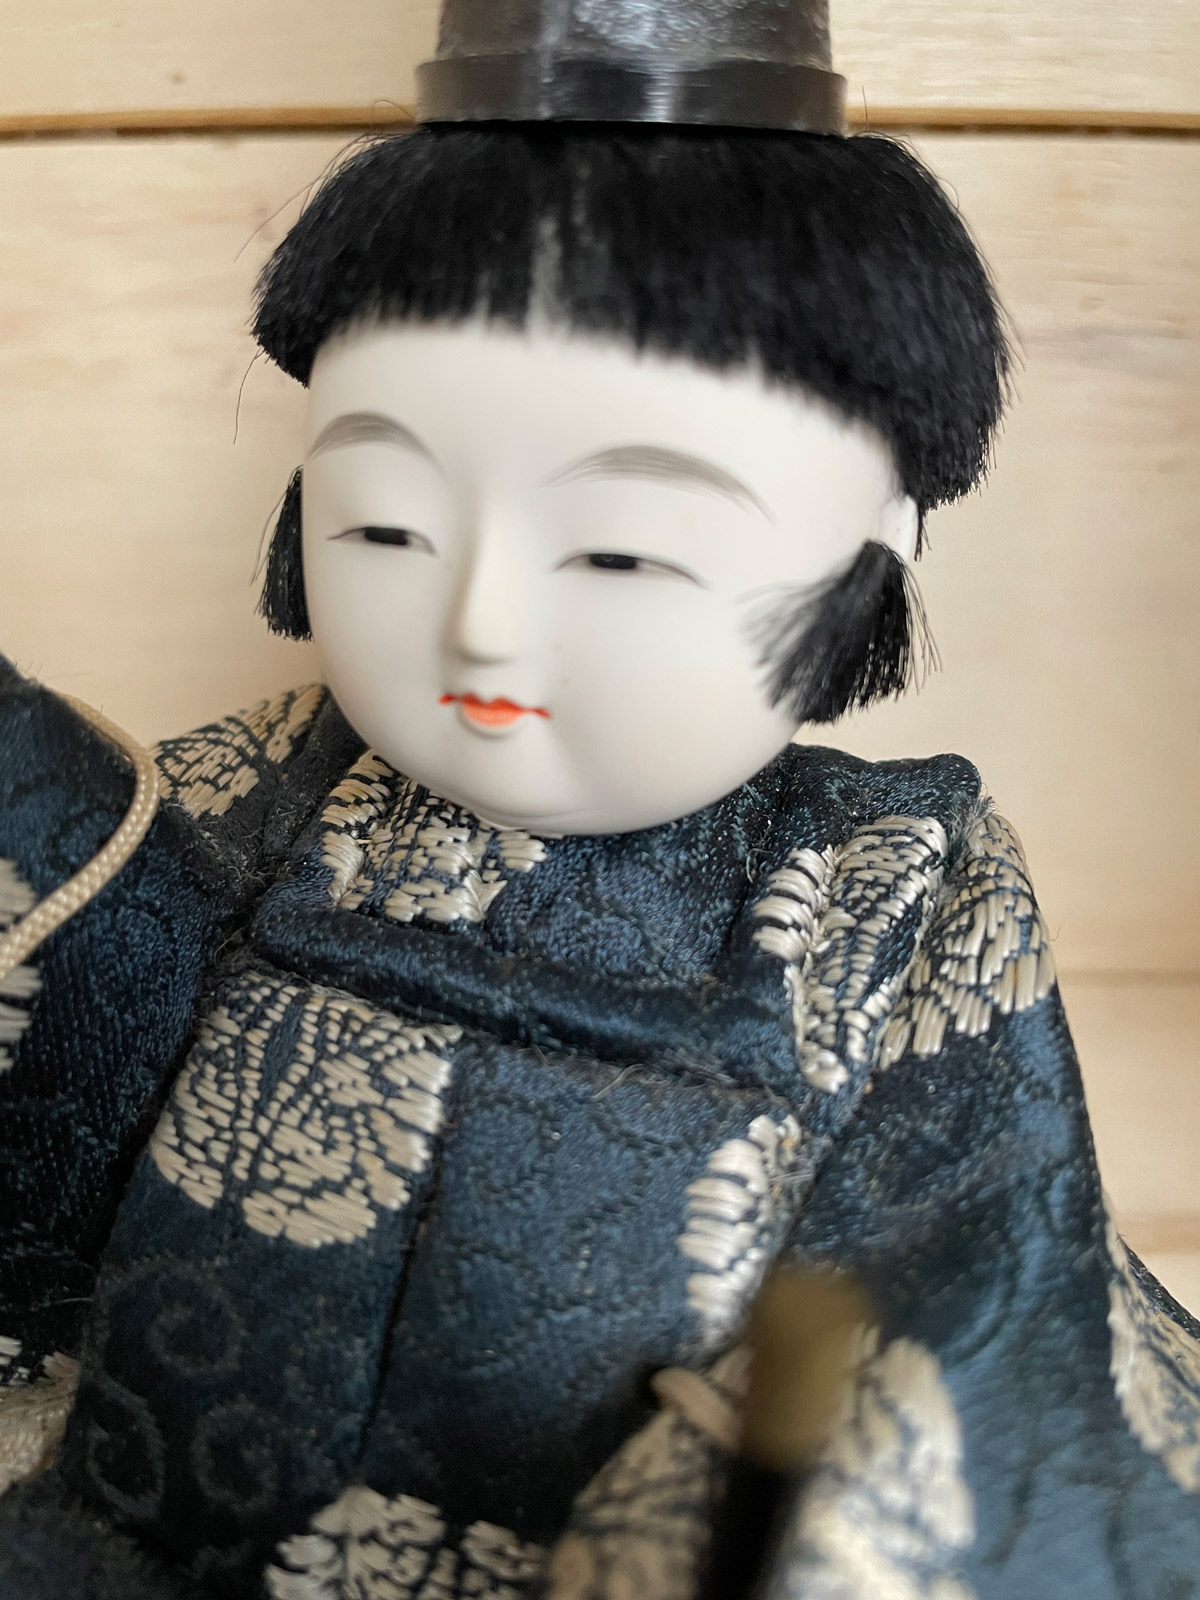 Vintage Hina doll – musician taiko drum